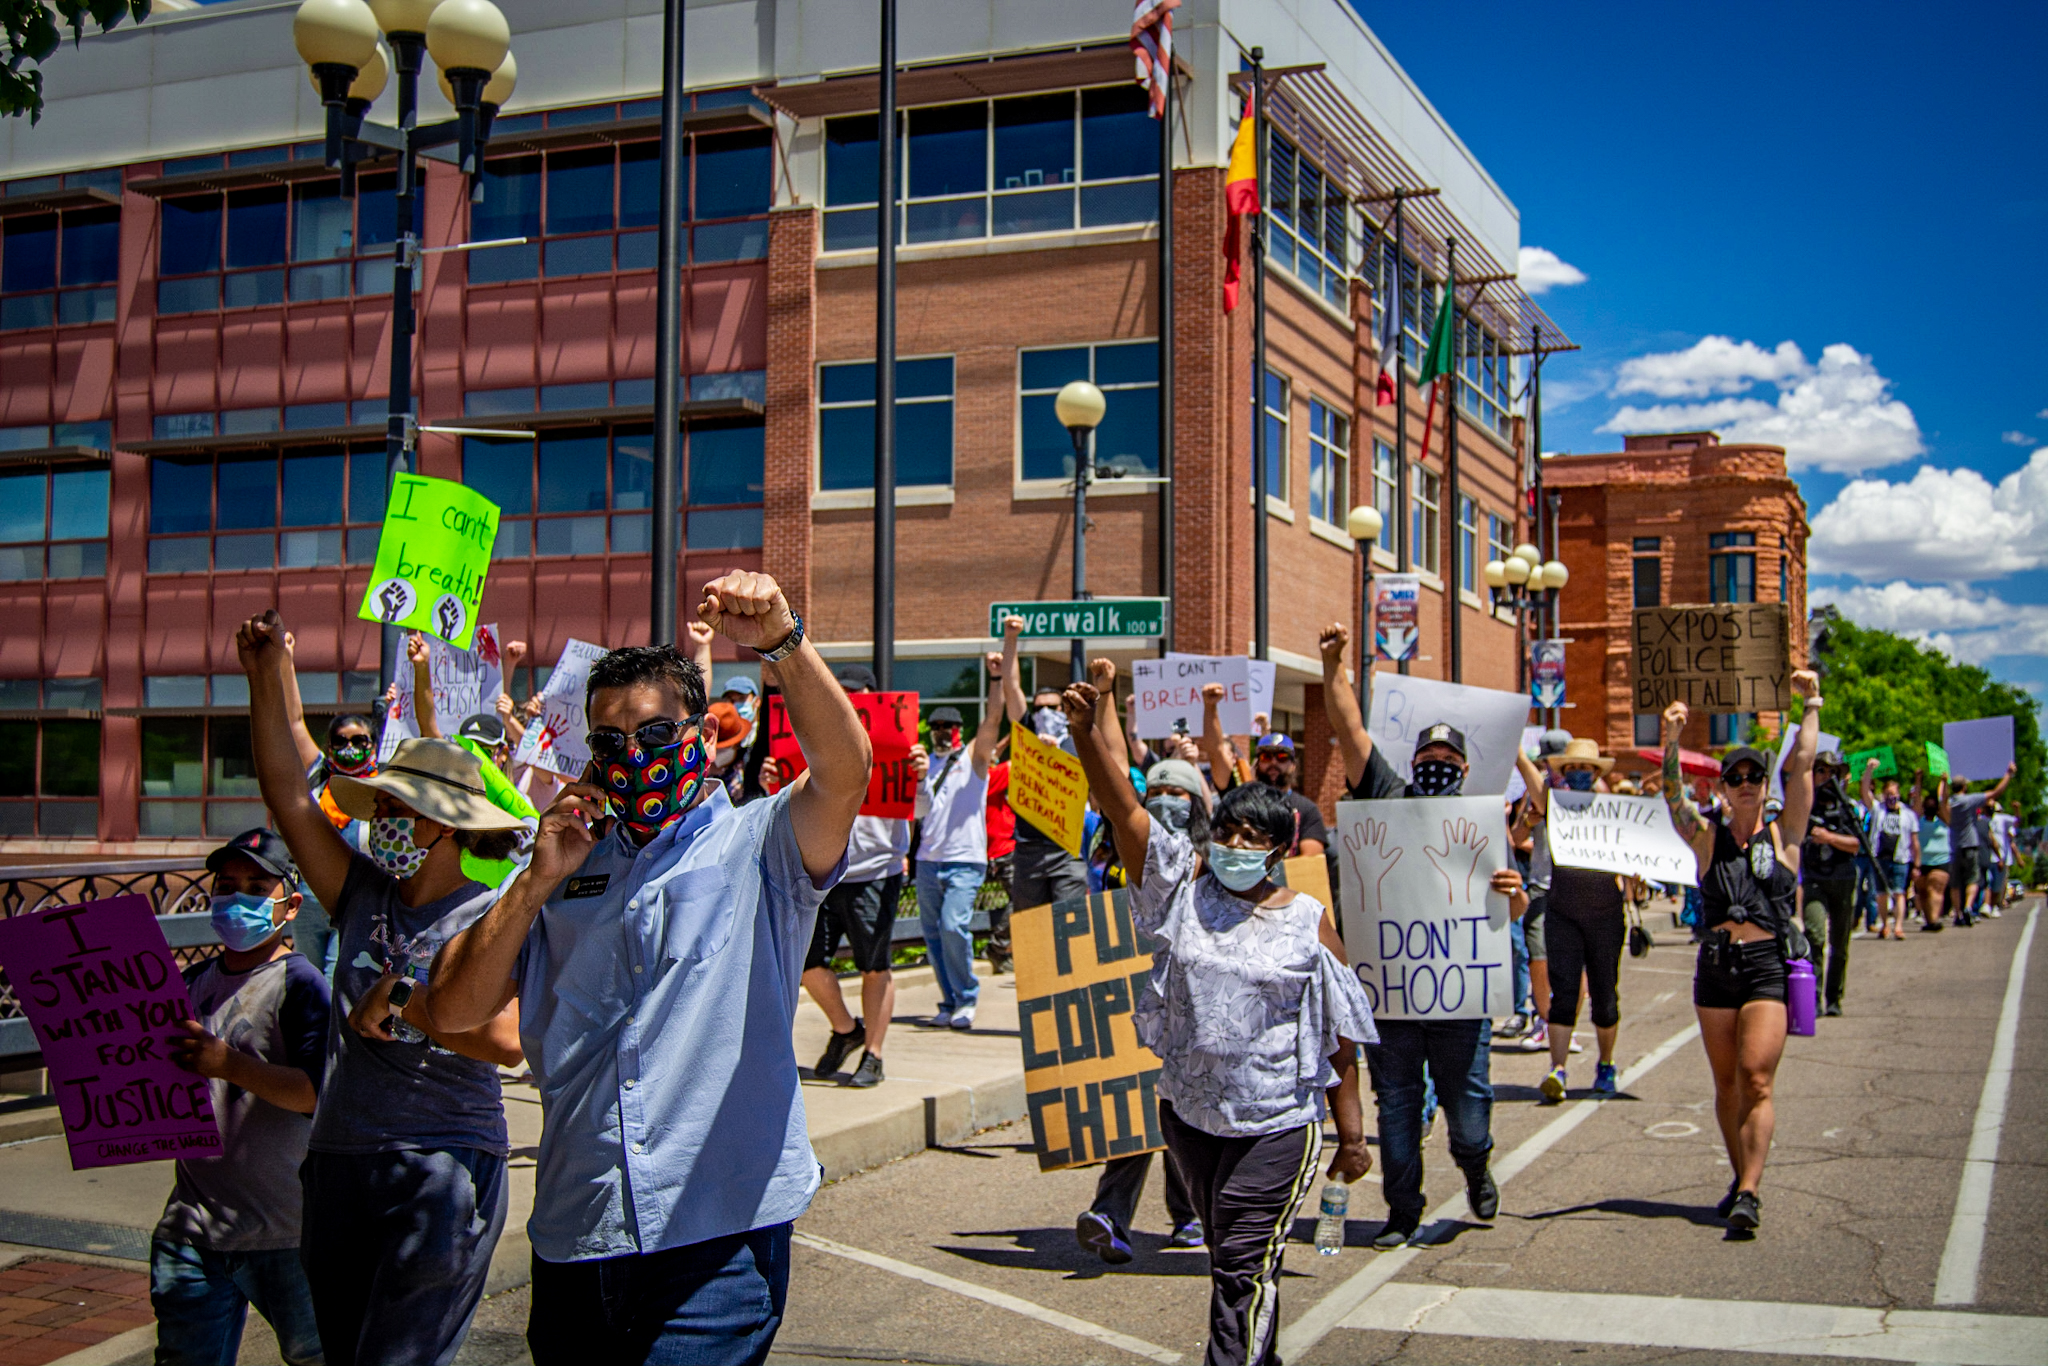 Marchers on Union Avenue in Pueblo